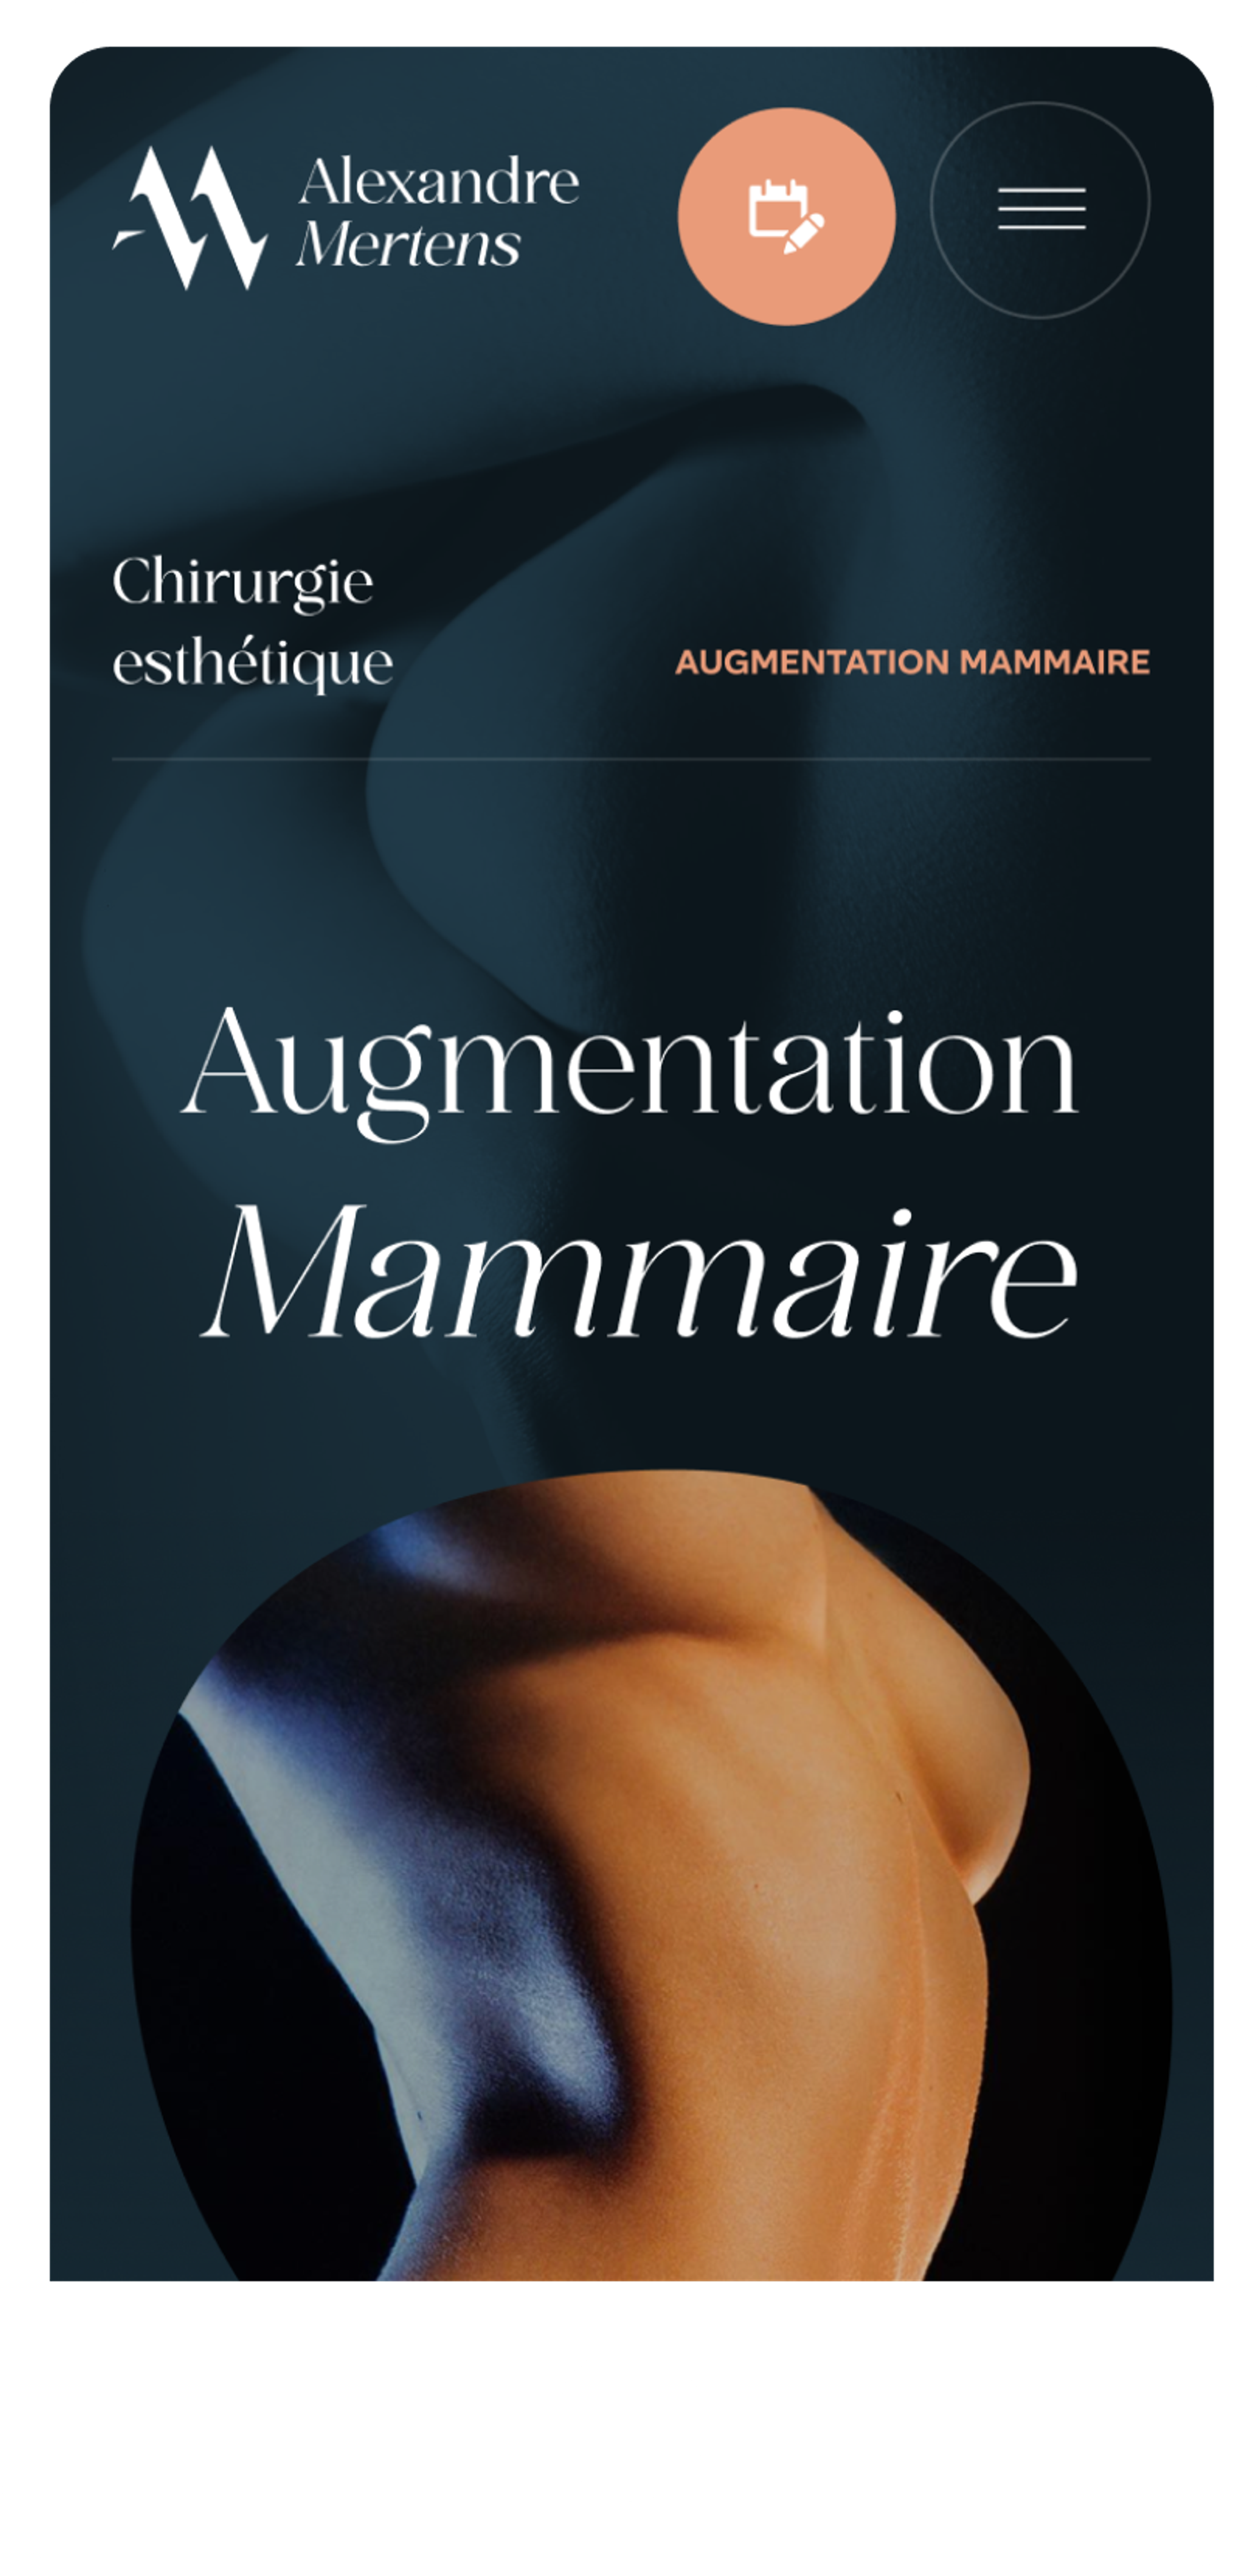 Alexandre Mertens section augmentation mammaire mobile